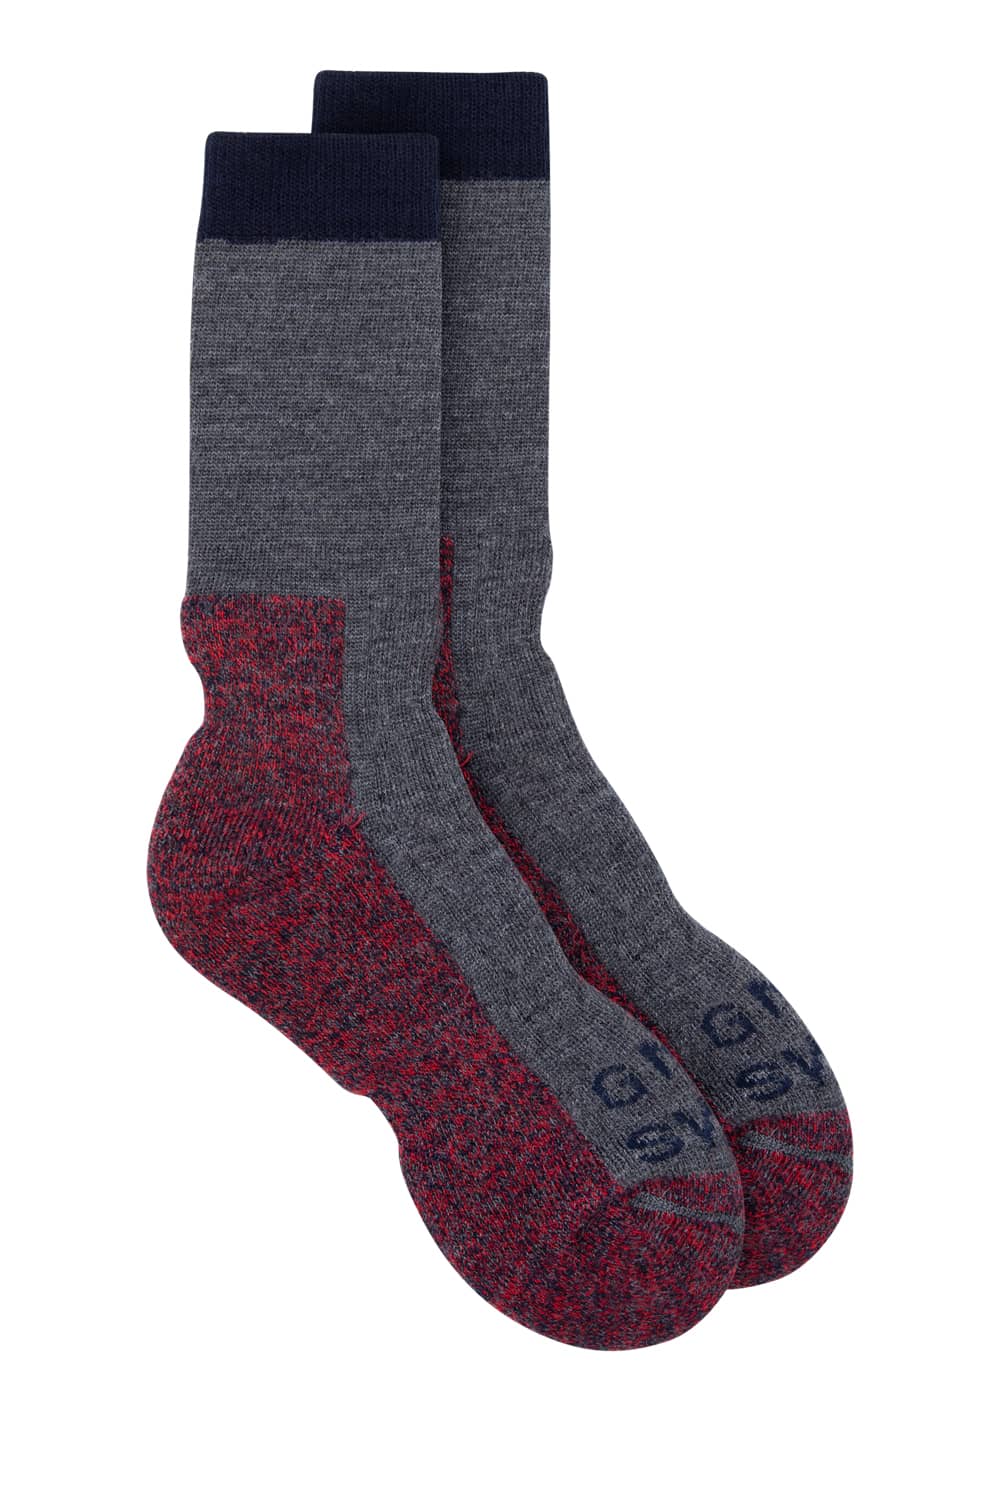 Merino Wool Gift Set Socks Black Lilac Marl in British Made